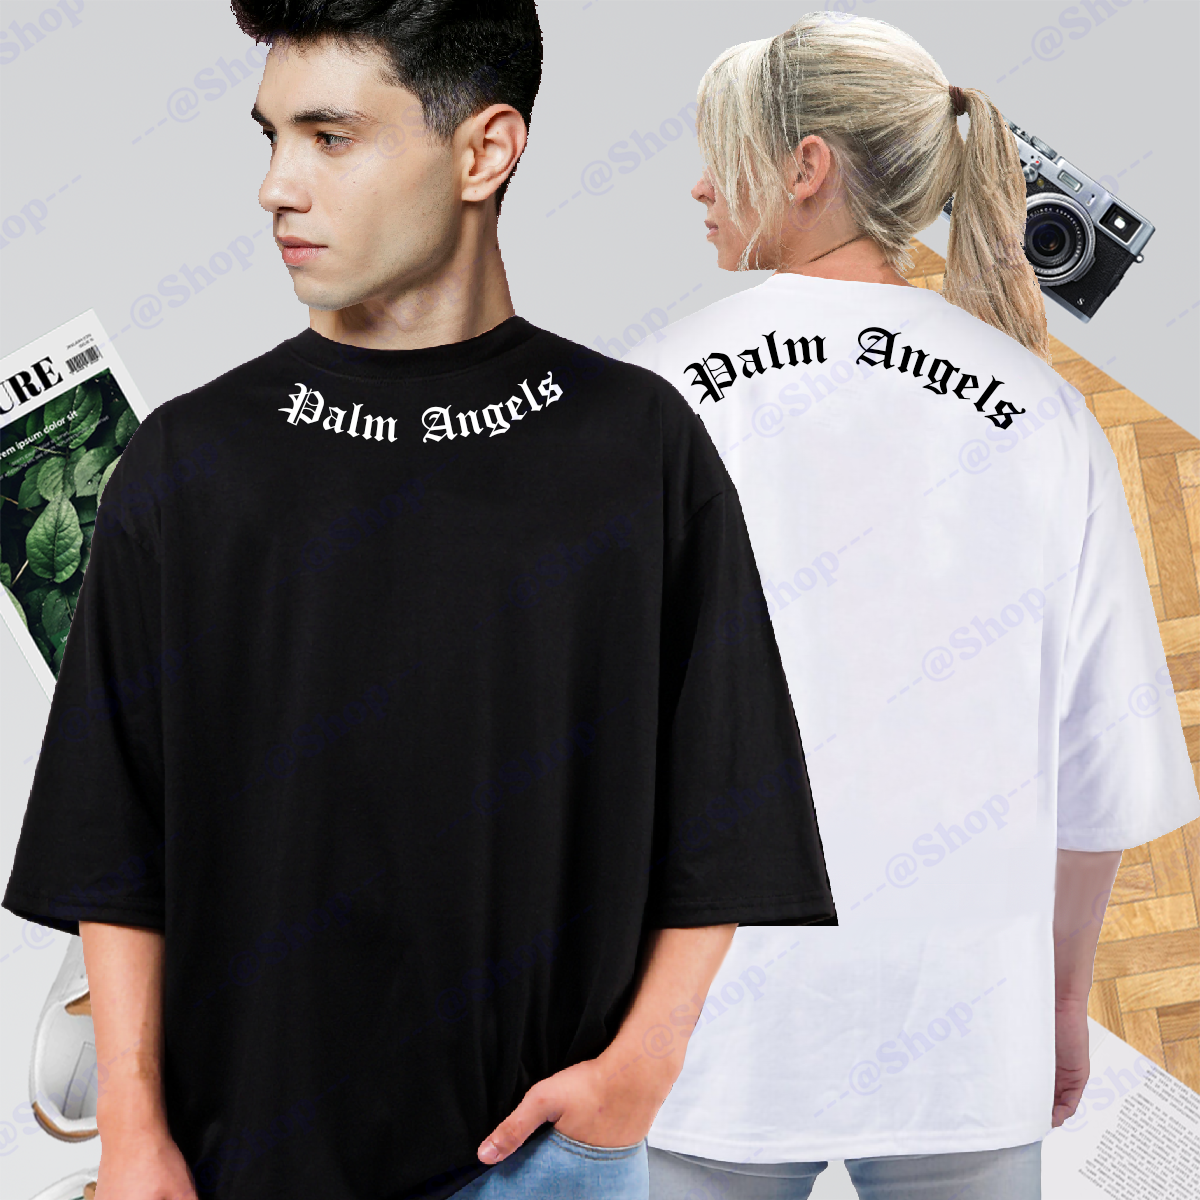 Shop Palm Angels Shirt online